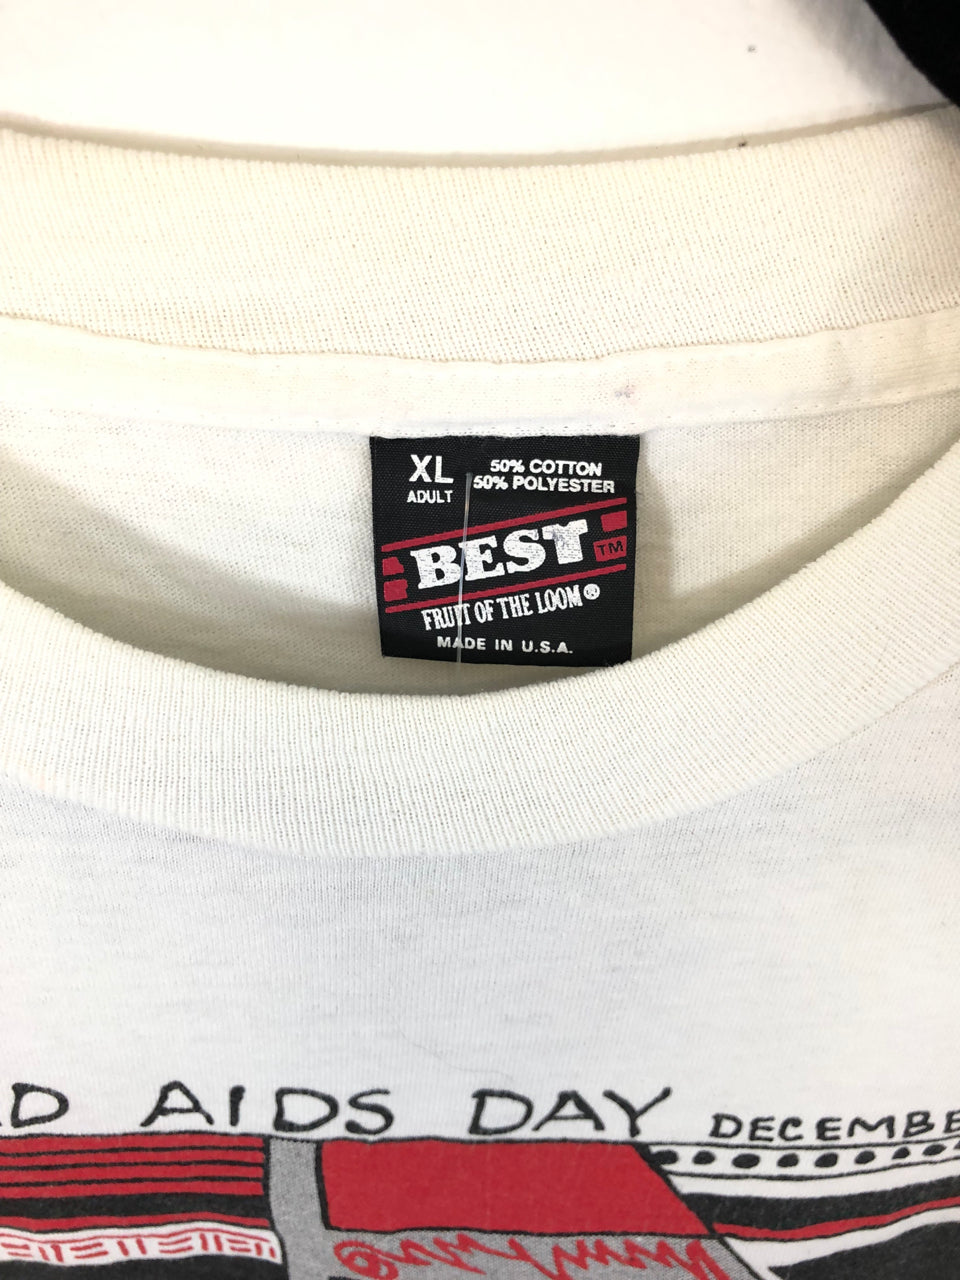 1993 World AIDS Day / Women Against AIDS Long-Sleeved T-Shirt